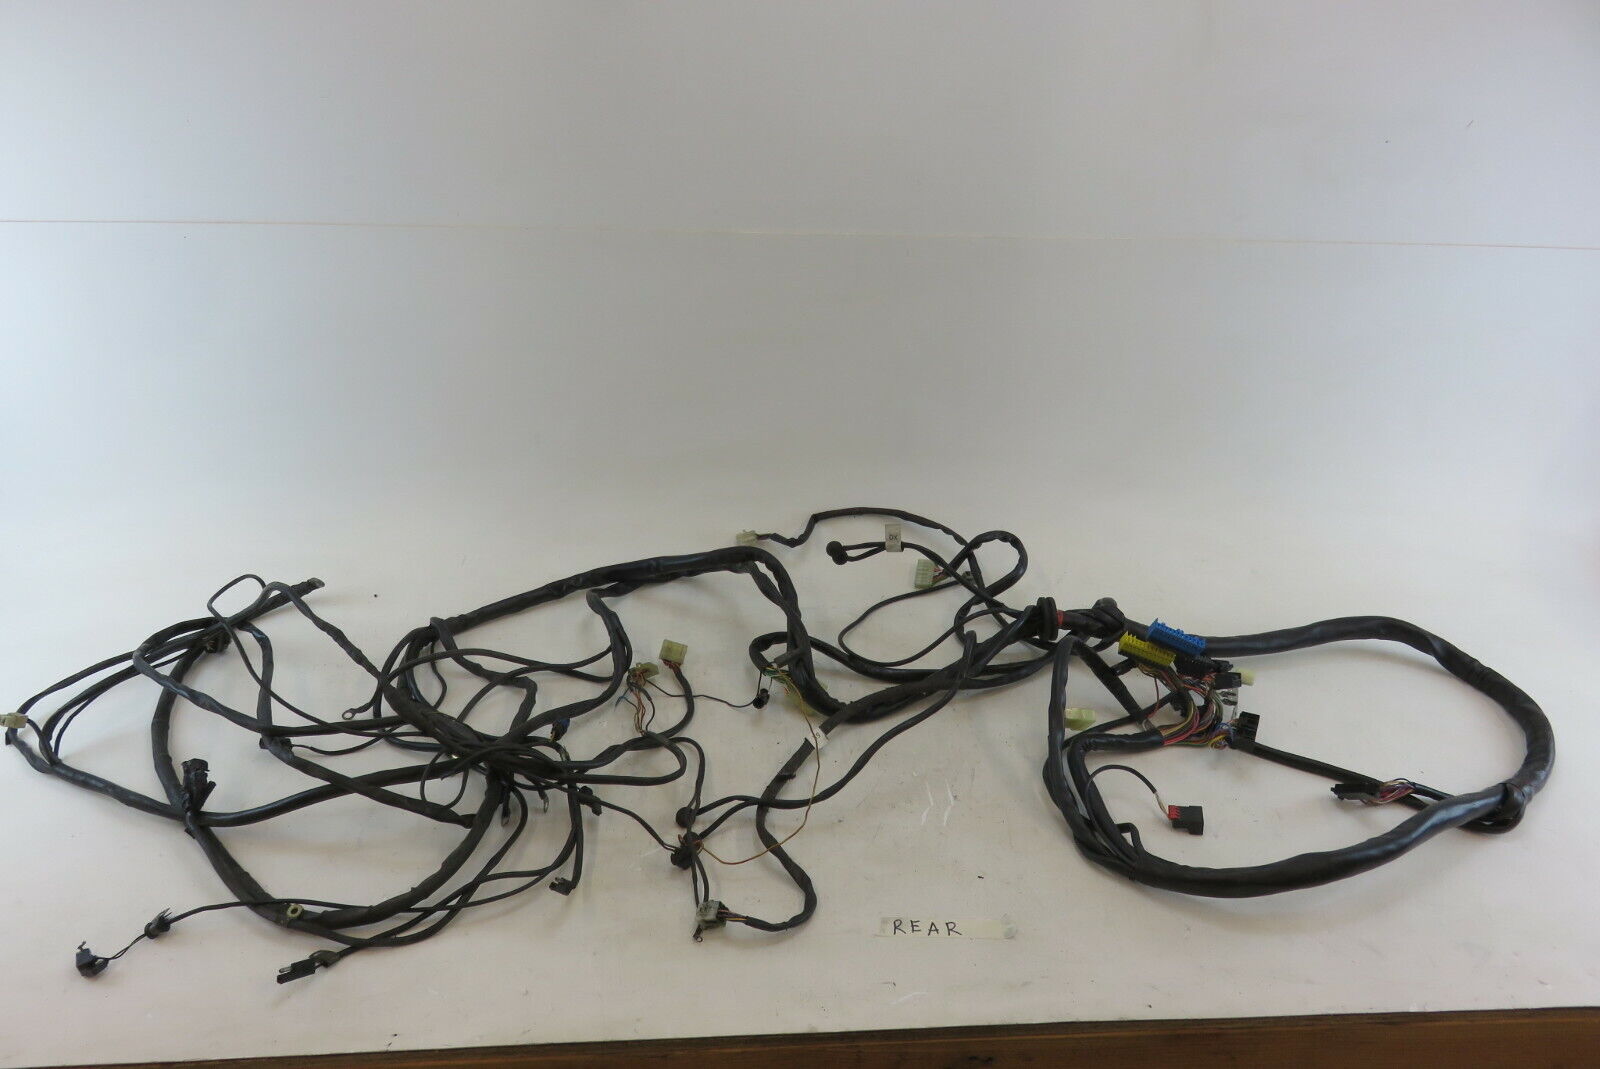 94 Ferrari 348 TS wiring harness, rear end